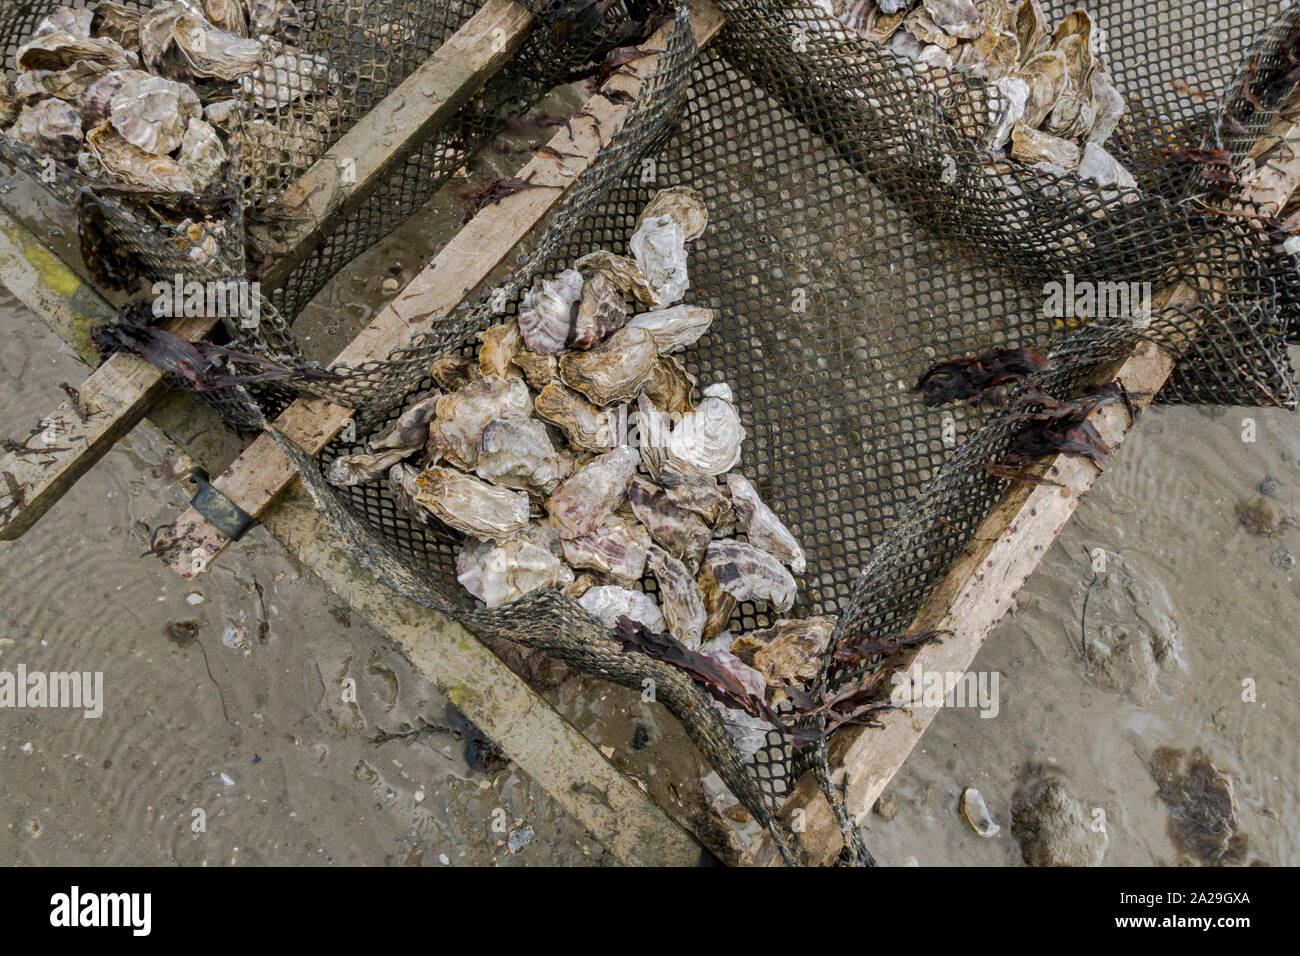 Oyster racks, oyster farm at low tide, Chesil Beach, Fleet Lagoon, Dorset, United Kingdom. Stock Photo